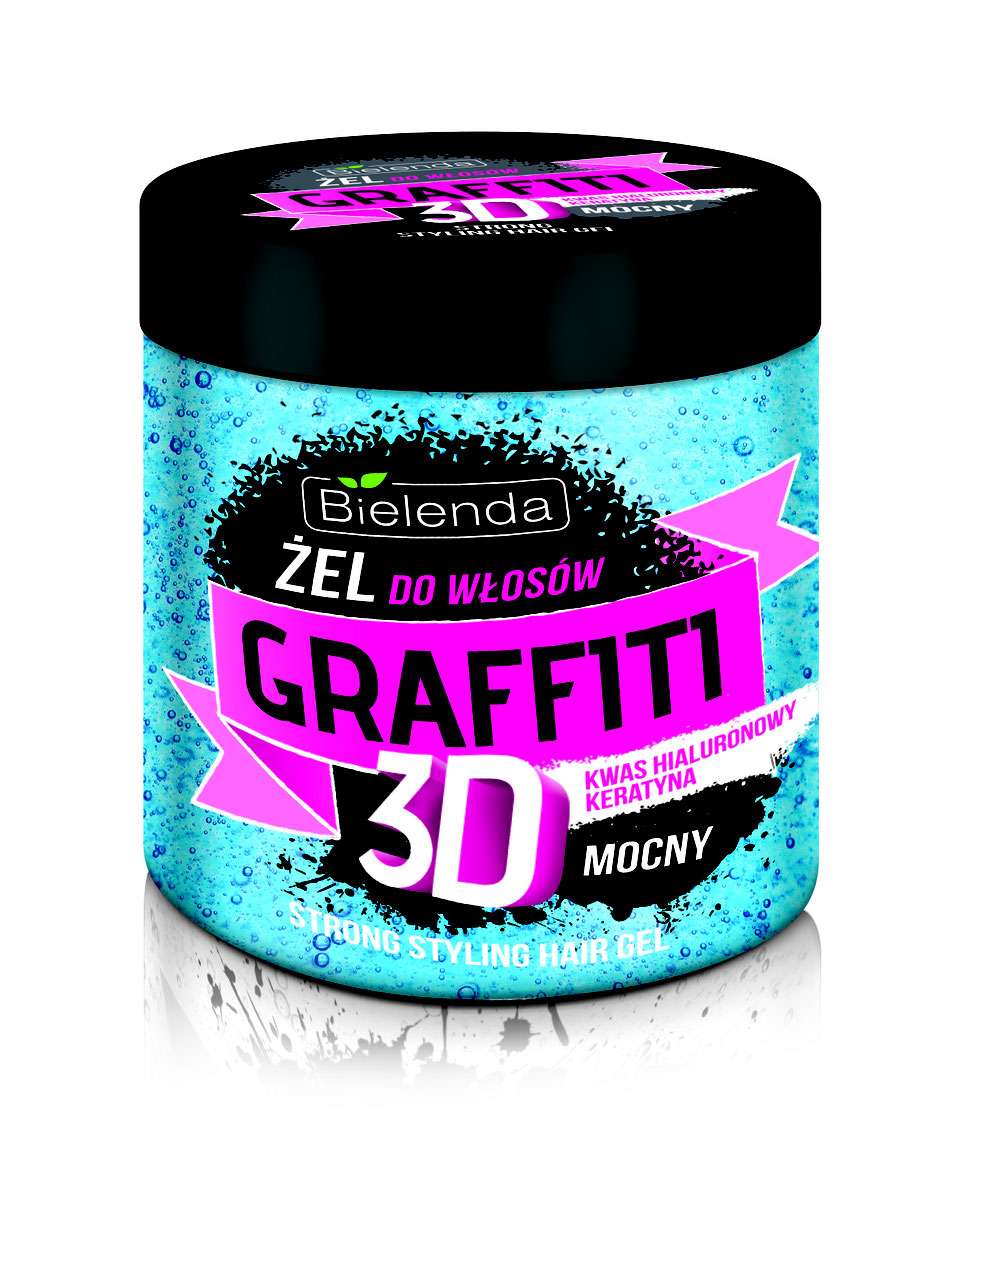 Bielenda GRAFFITI 3D гель для волос Mocny